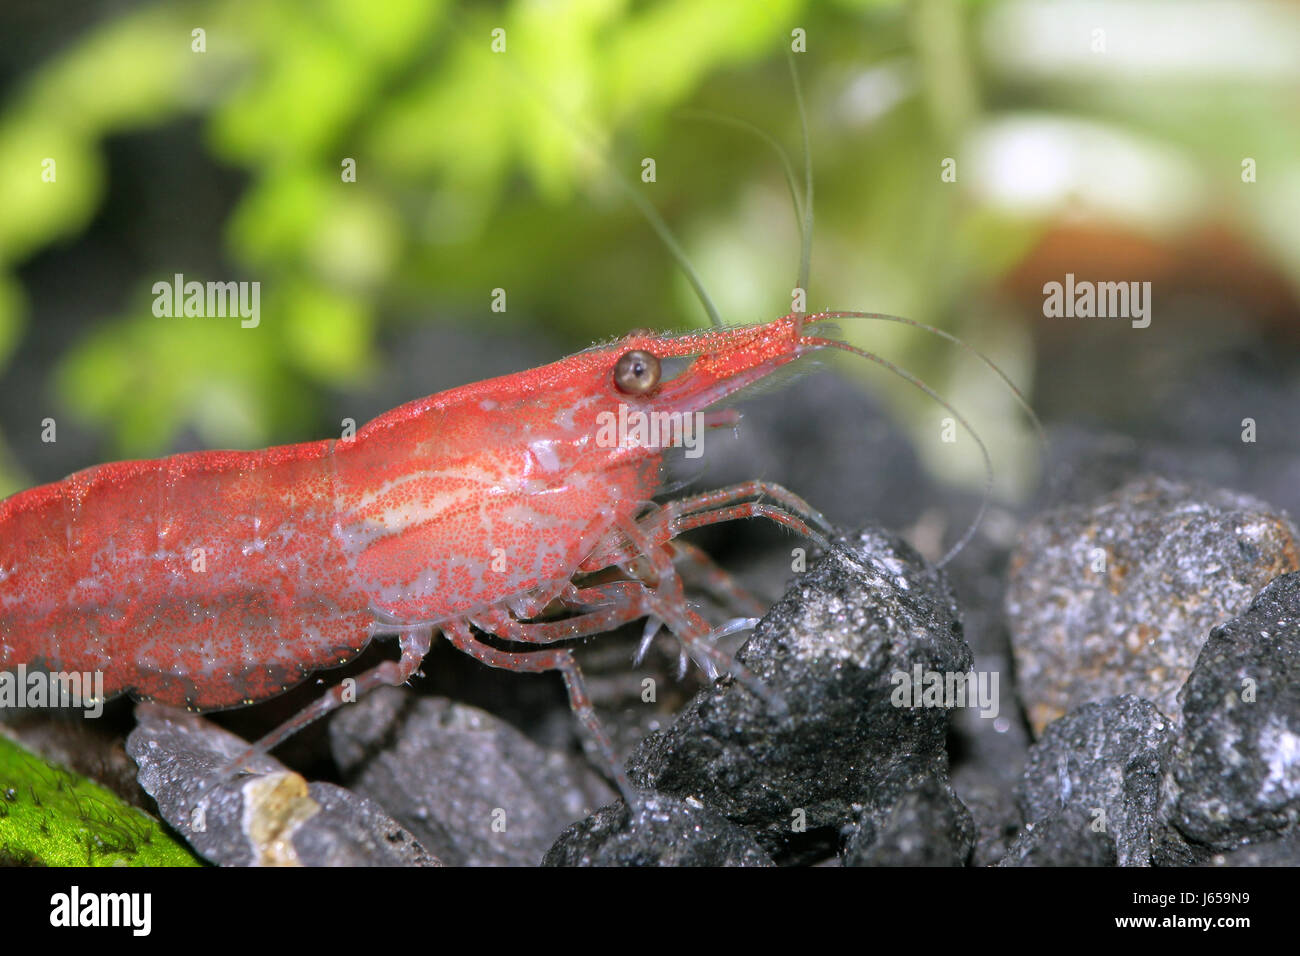 aquarium shrimp spinelessly red legs macro close-up macro admission close up Stock Photo